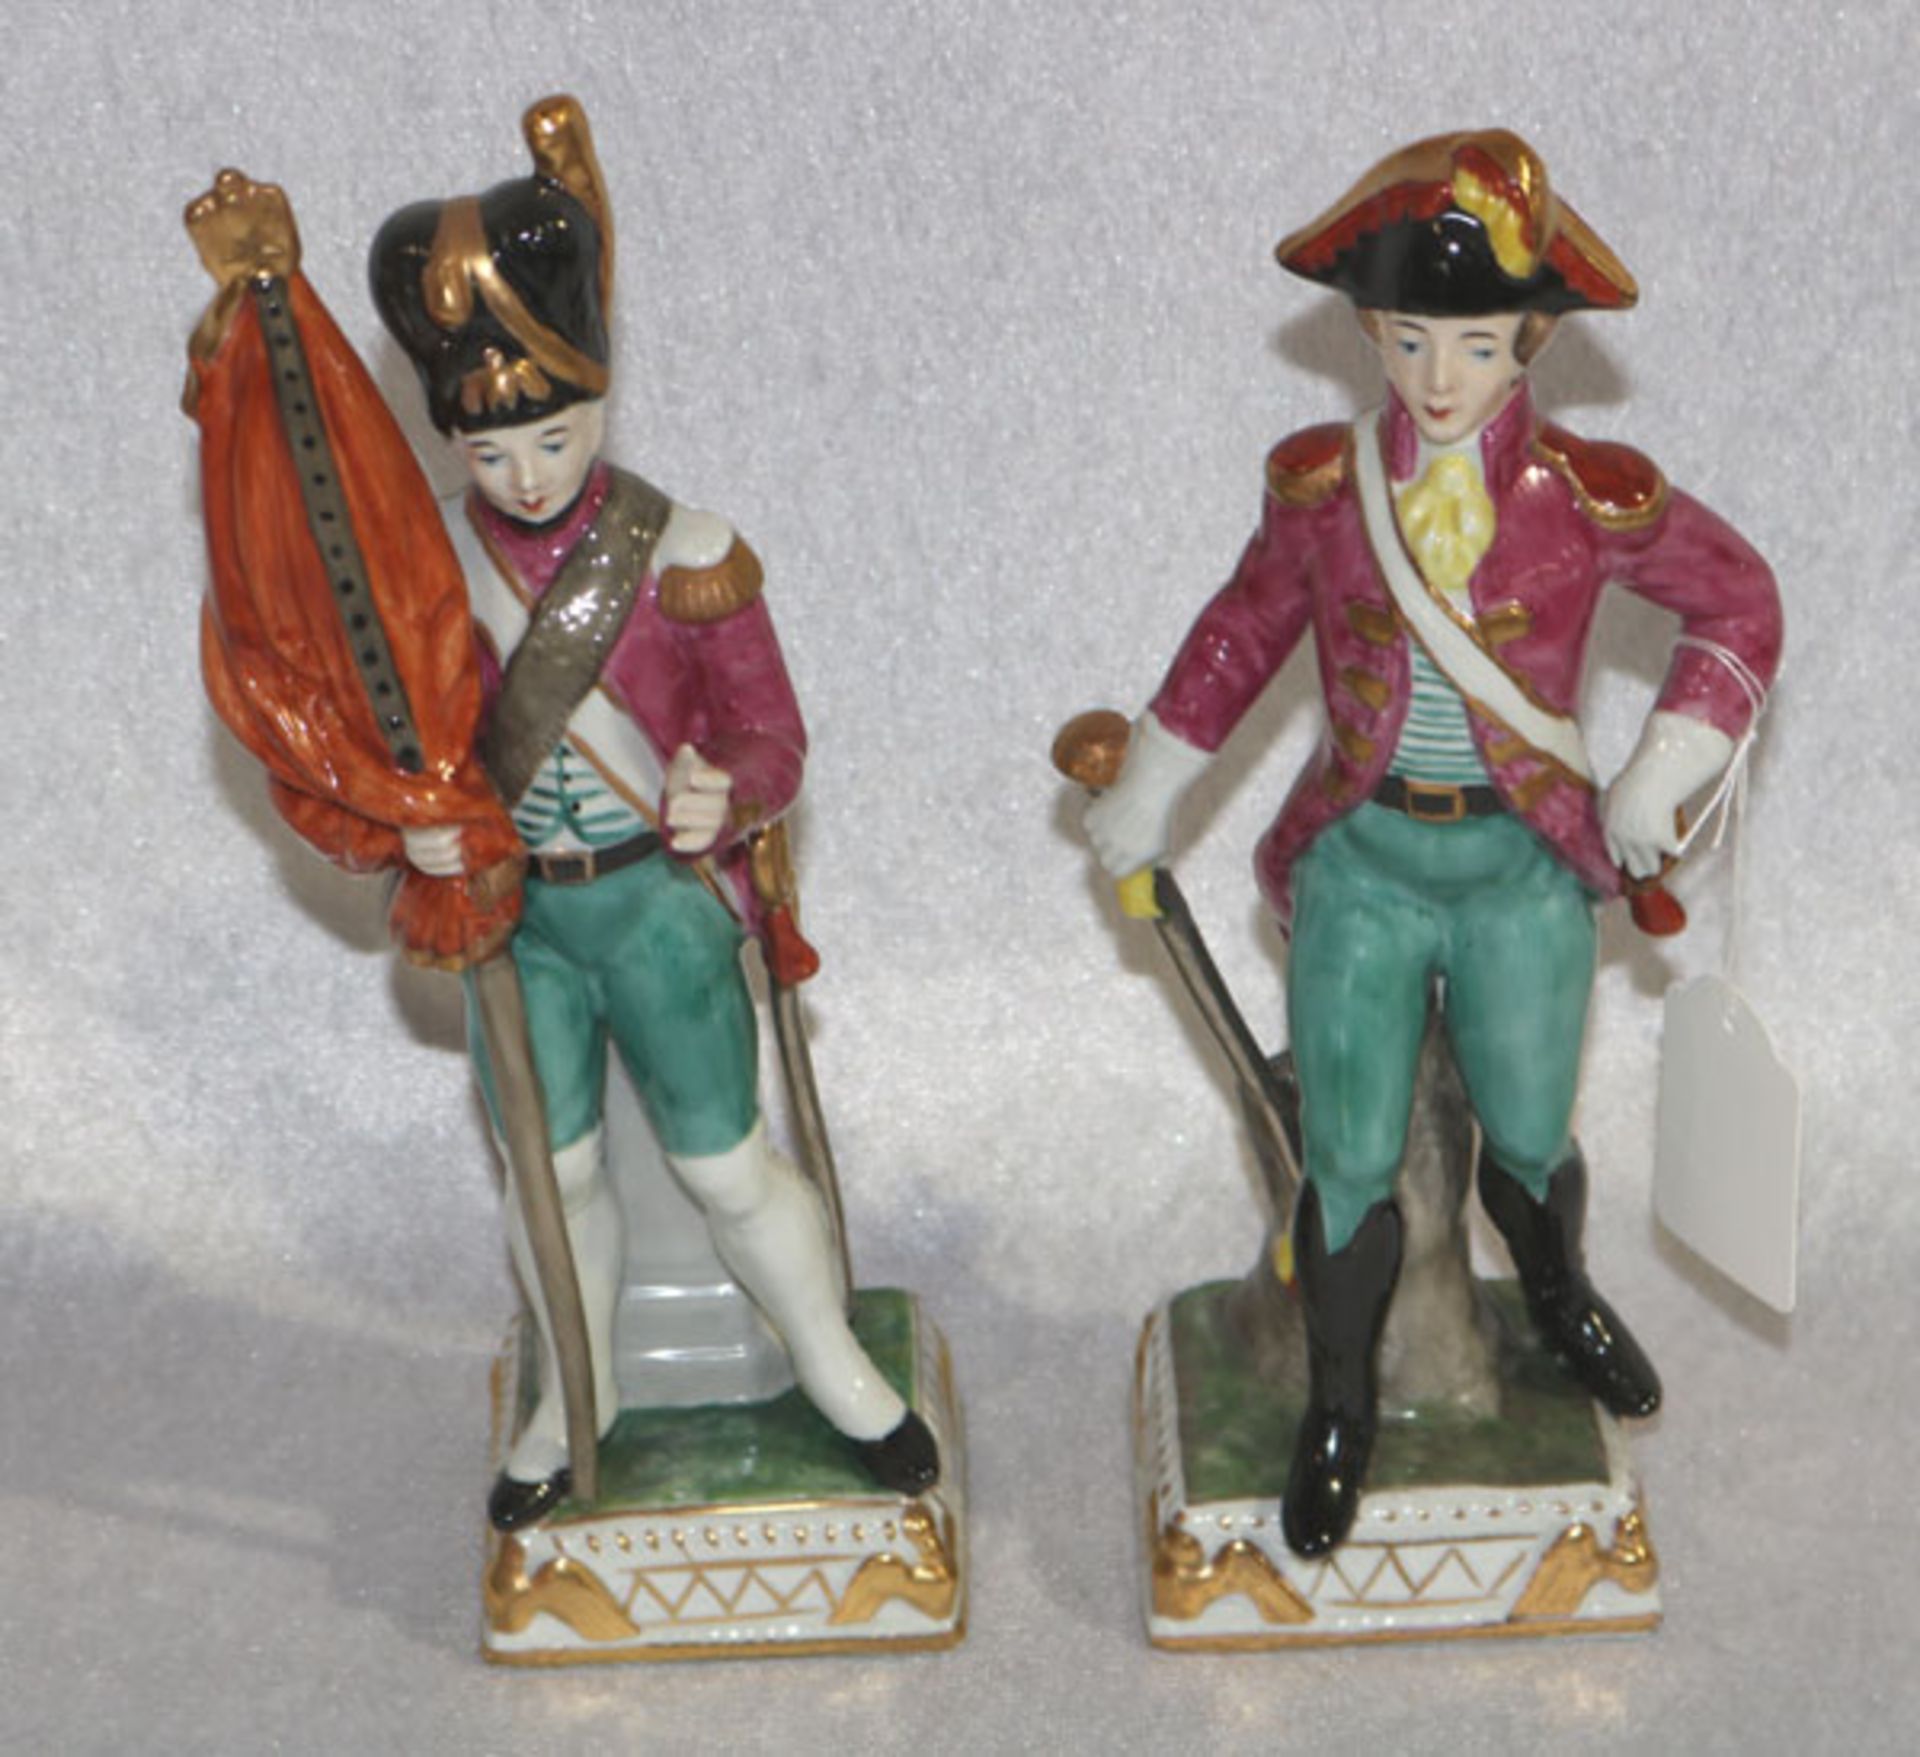 2 Porzellanfiguren 'Soldaten', farbig bemalt, H 25 cm